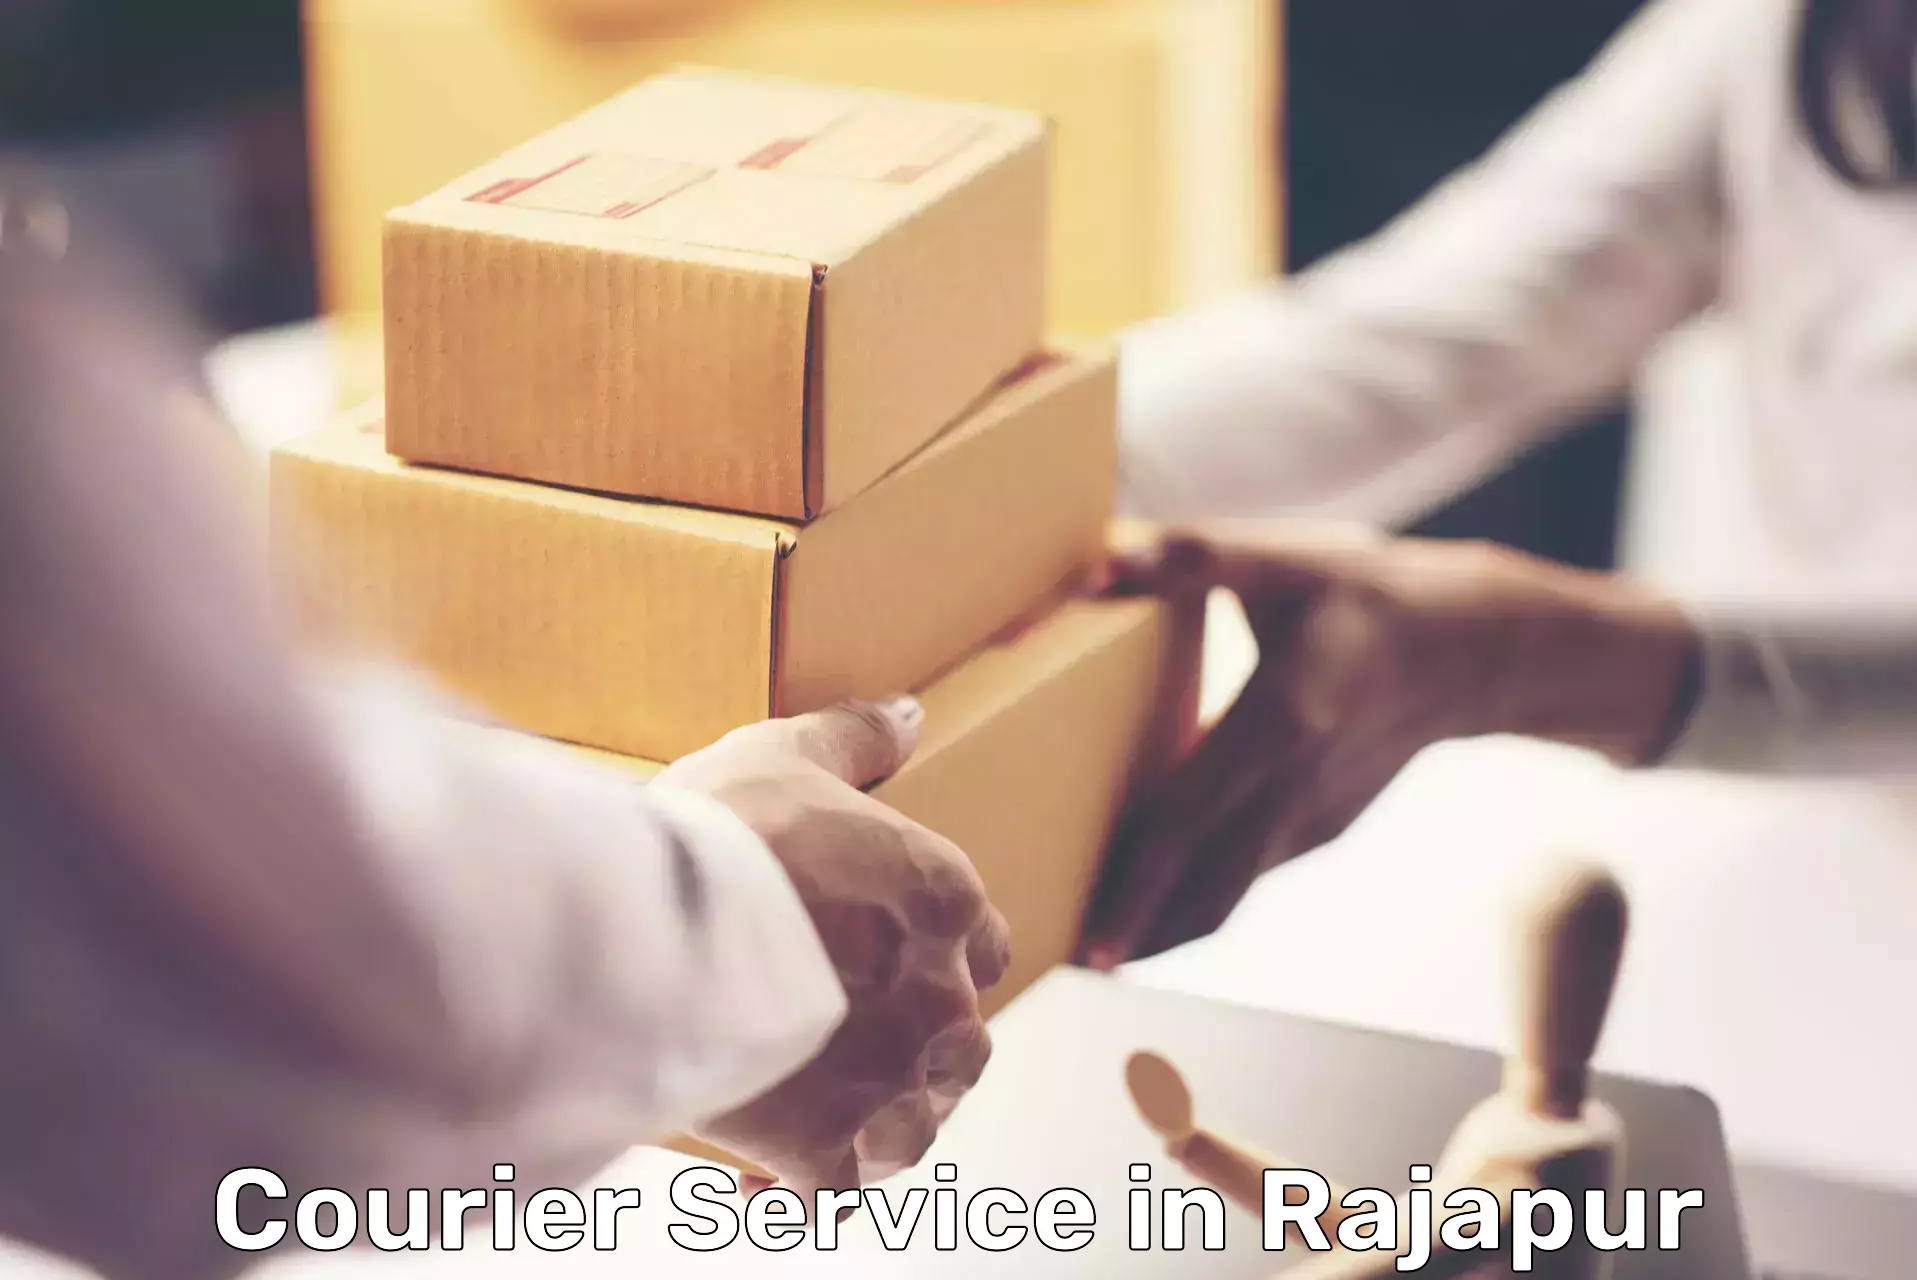 E-commerce shipping partnerships in Rajapur